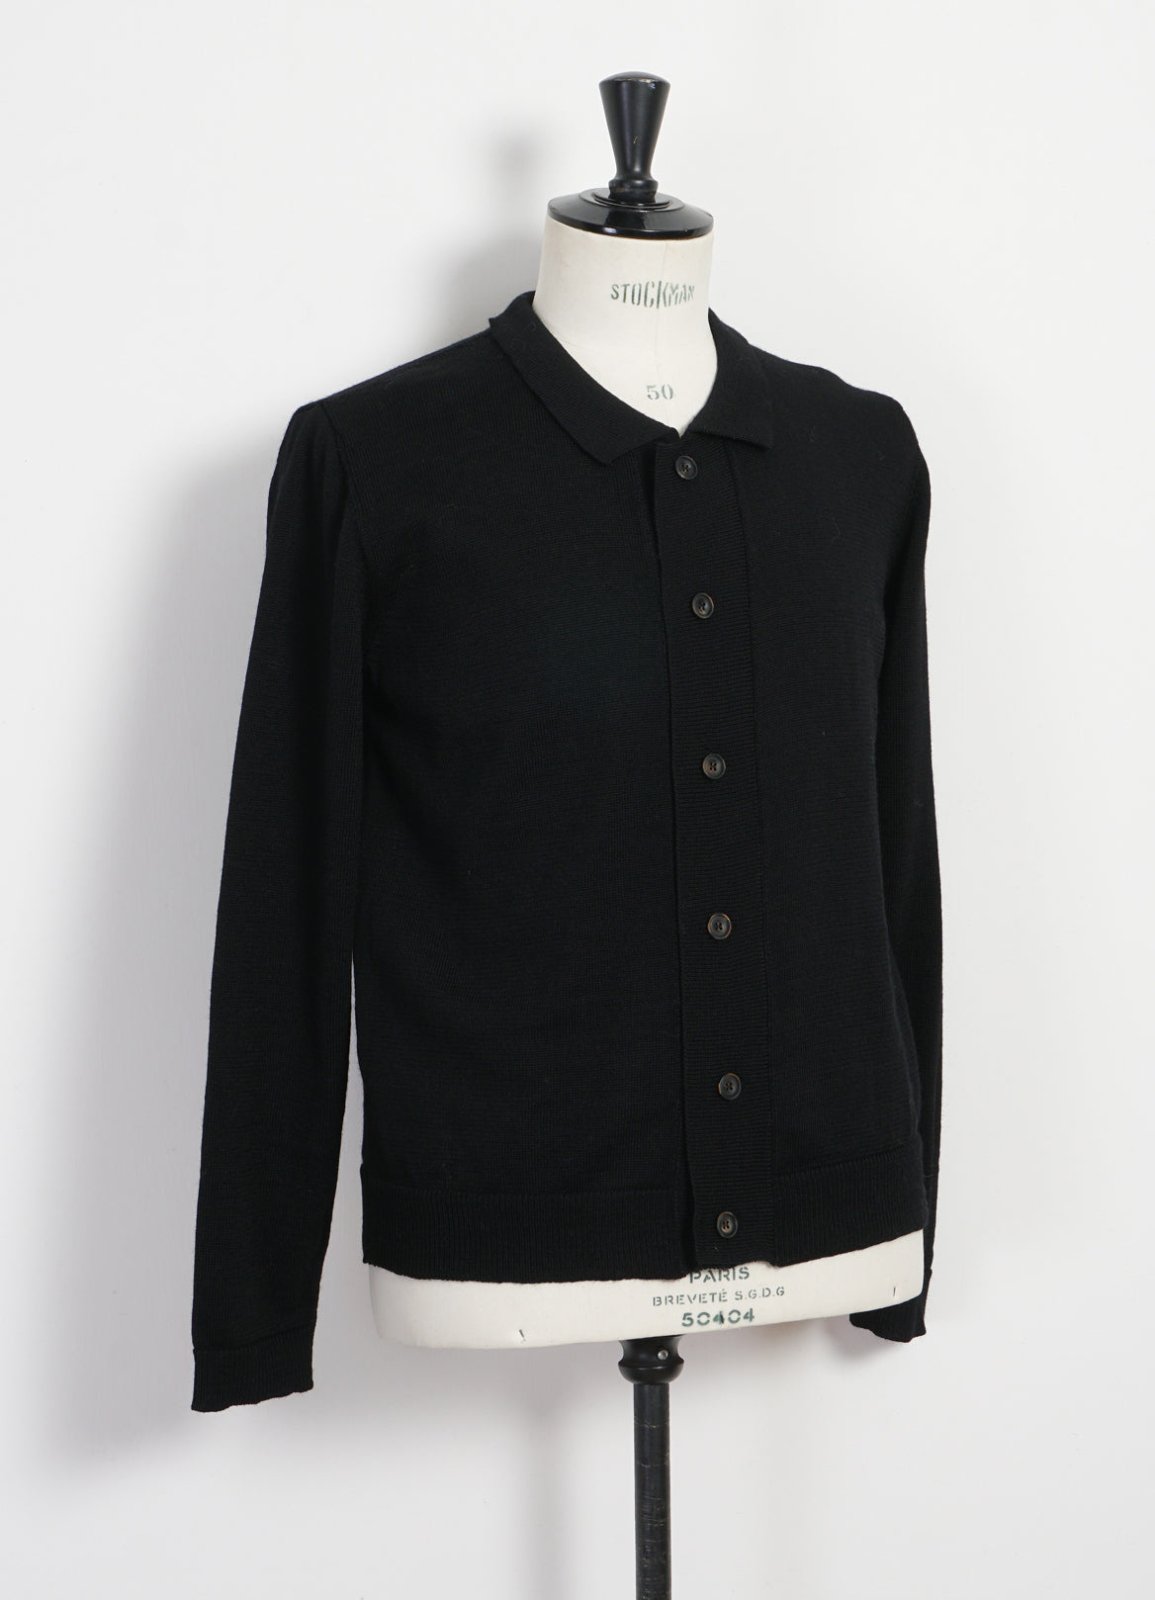 HANSEN GARMENTS - ARNOLD| Knitted Cardigan | Black - HANSEN Garments